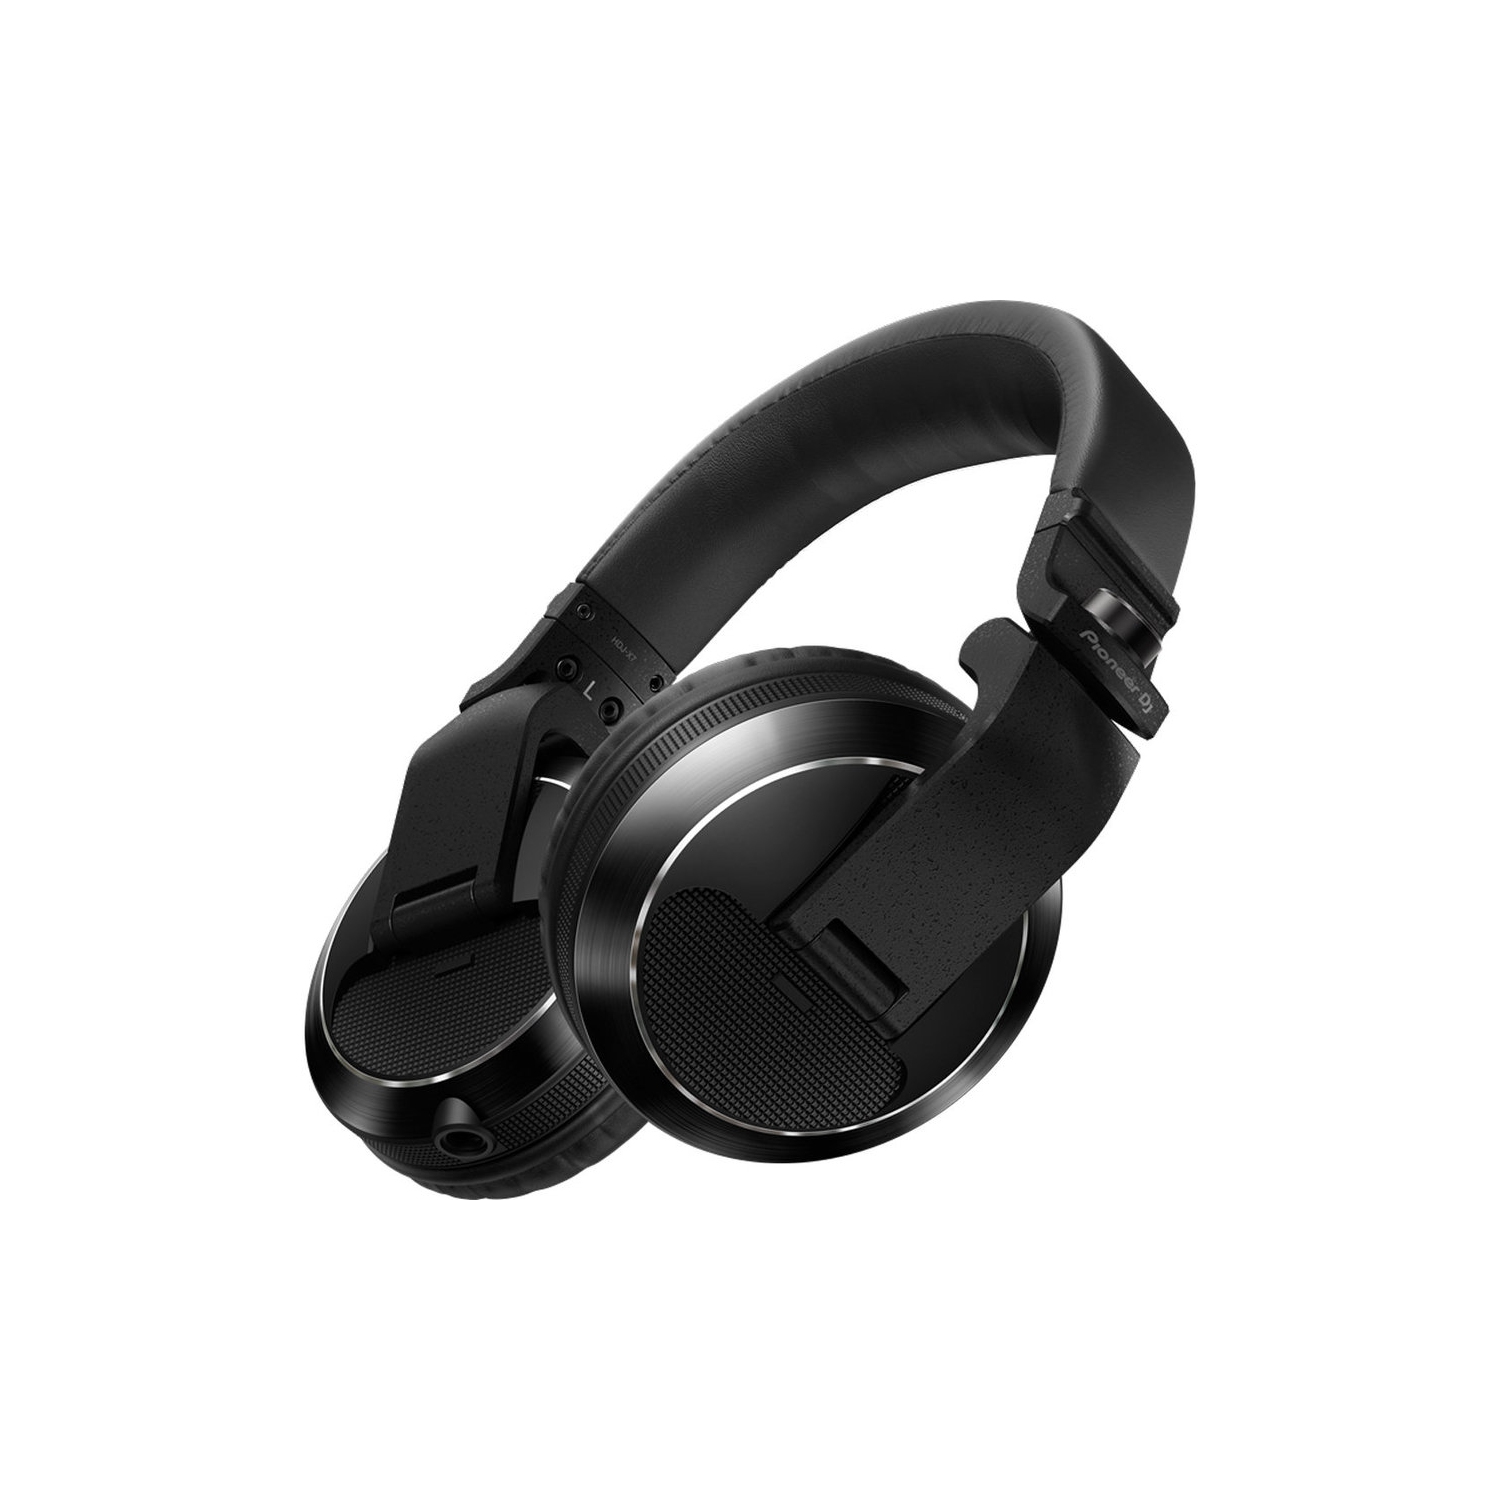 Pioneer HDJ-X7 Professional Over-Ear DJ Headphones - Black